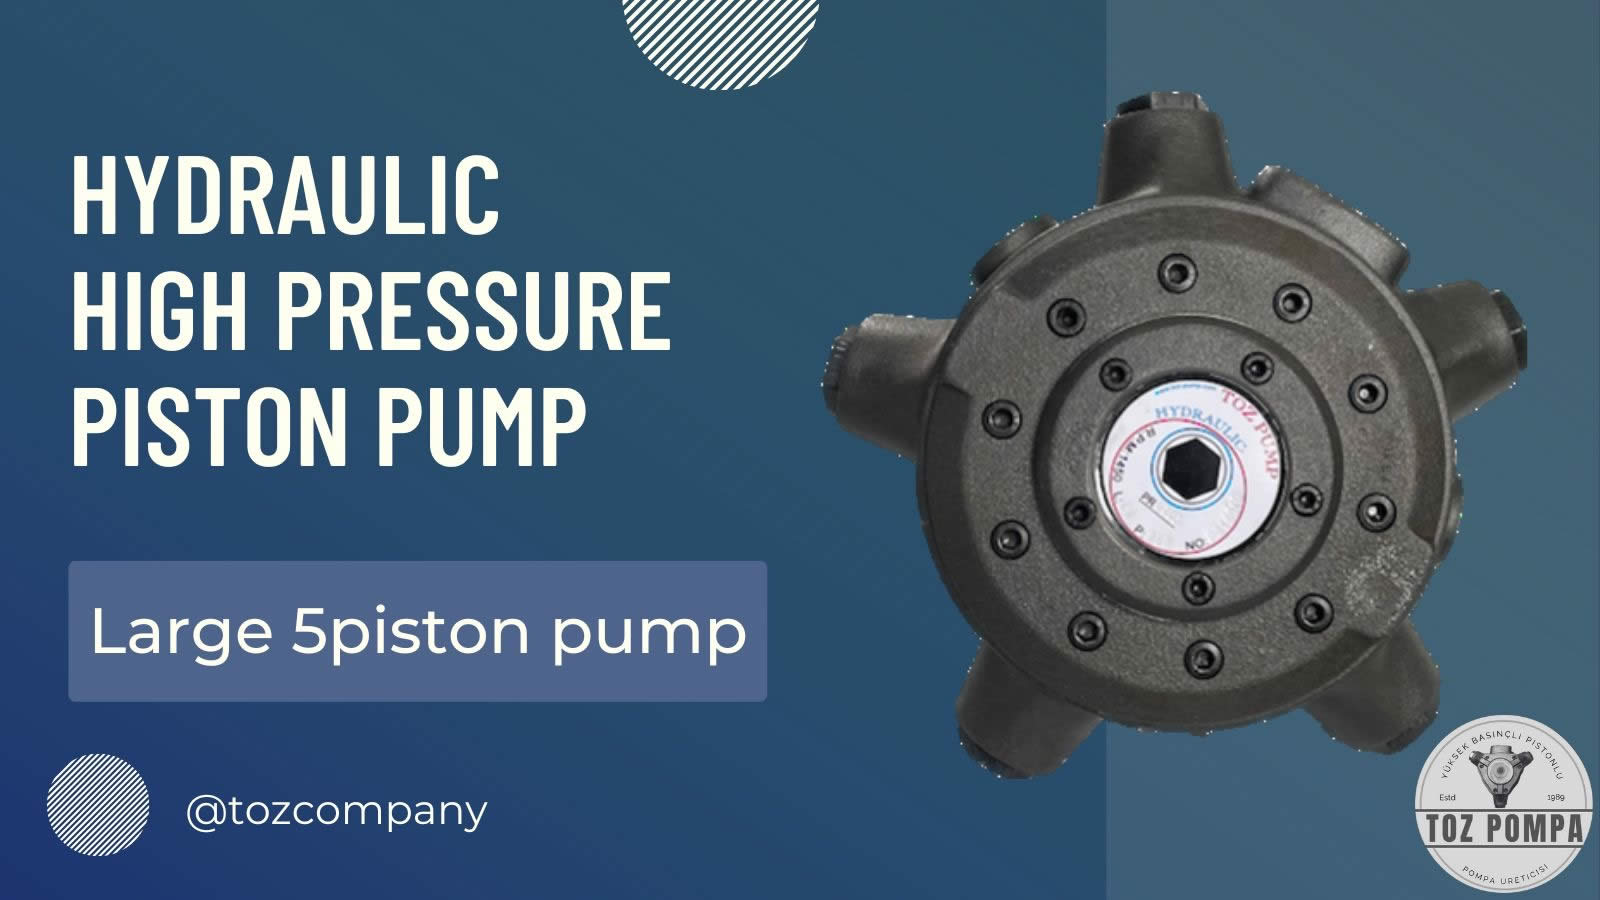 Large 5 piston pump